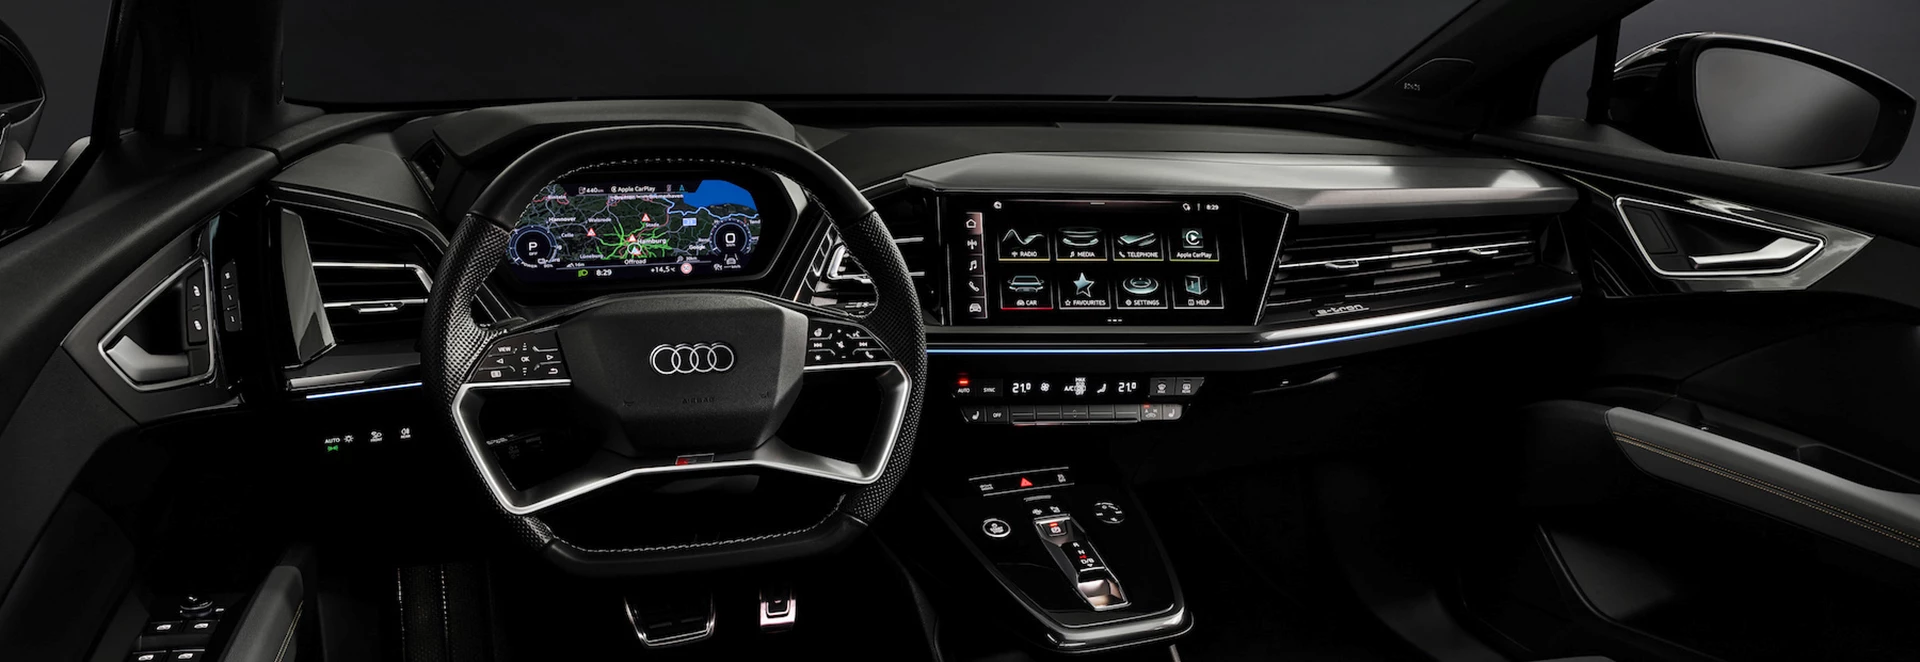 Audi shows off new Q4 e-tron EV’s interior ahead of imminent full reveal 